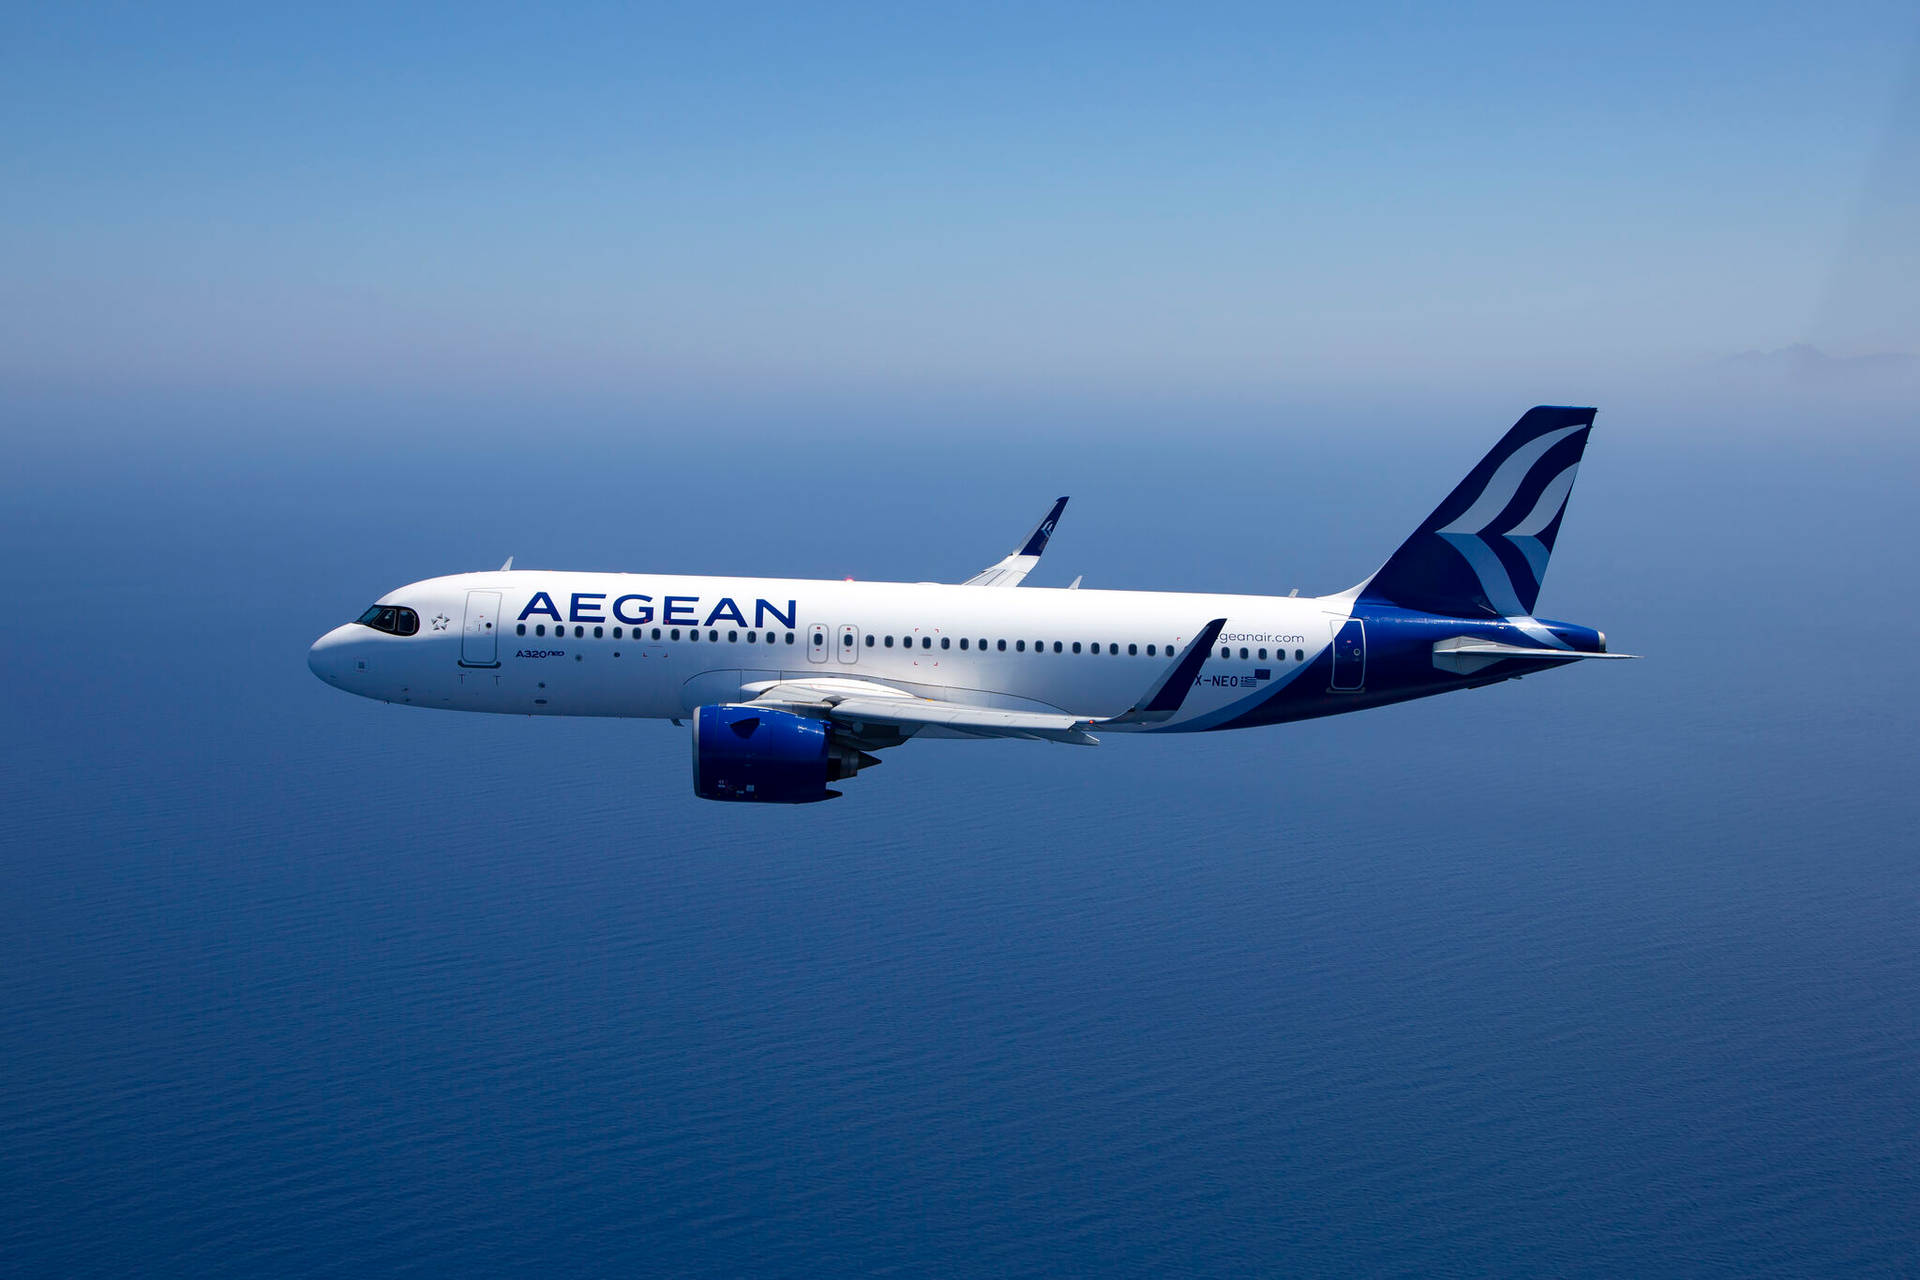 Fliegenmit Aegean Airlines A320neo Im Blauen Ombre-himmel Wallpaper